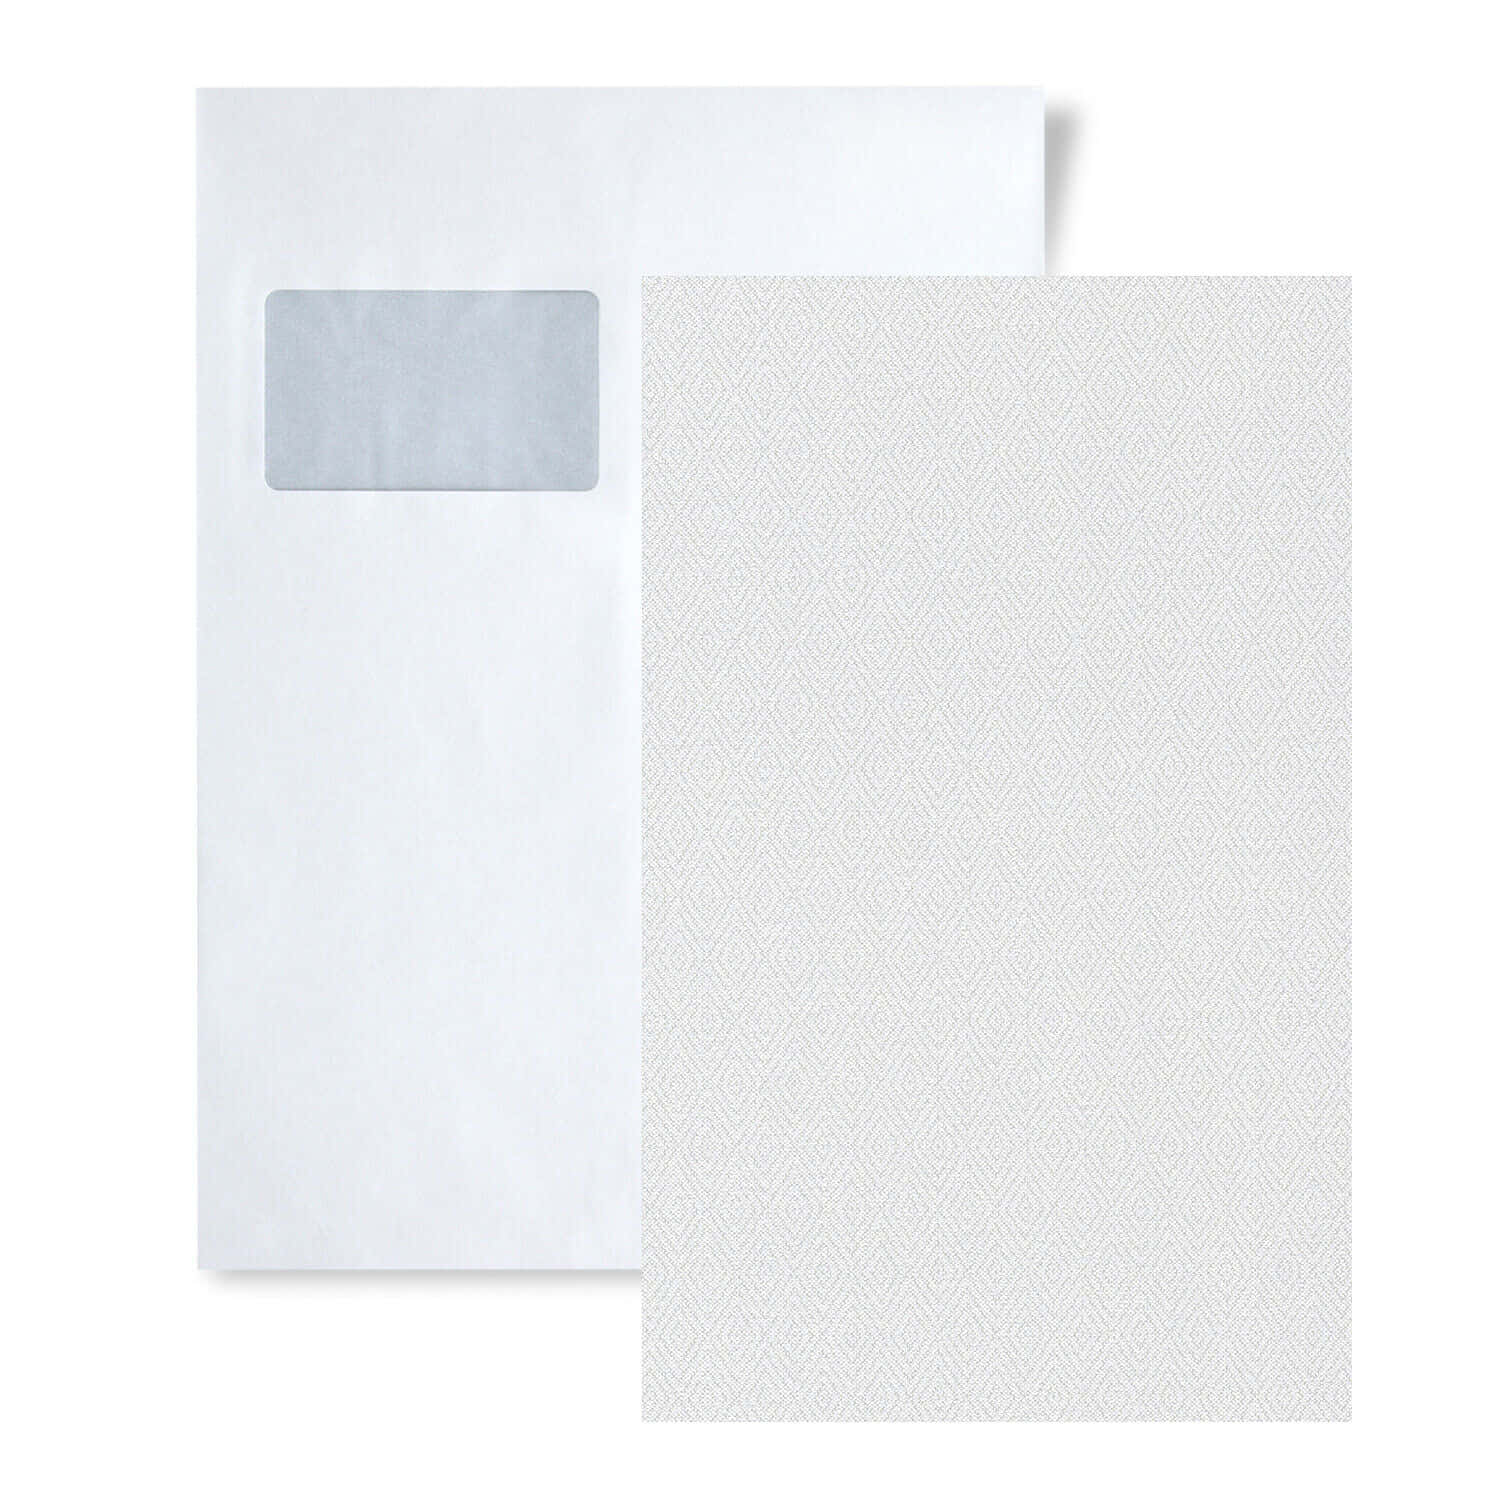 Papir med kompleks teksturmønster Wallpaper